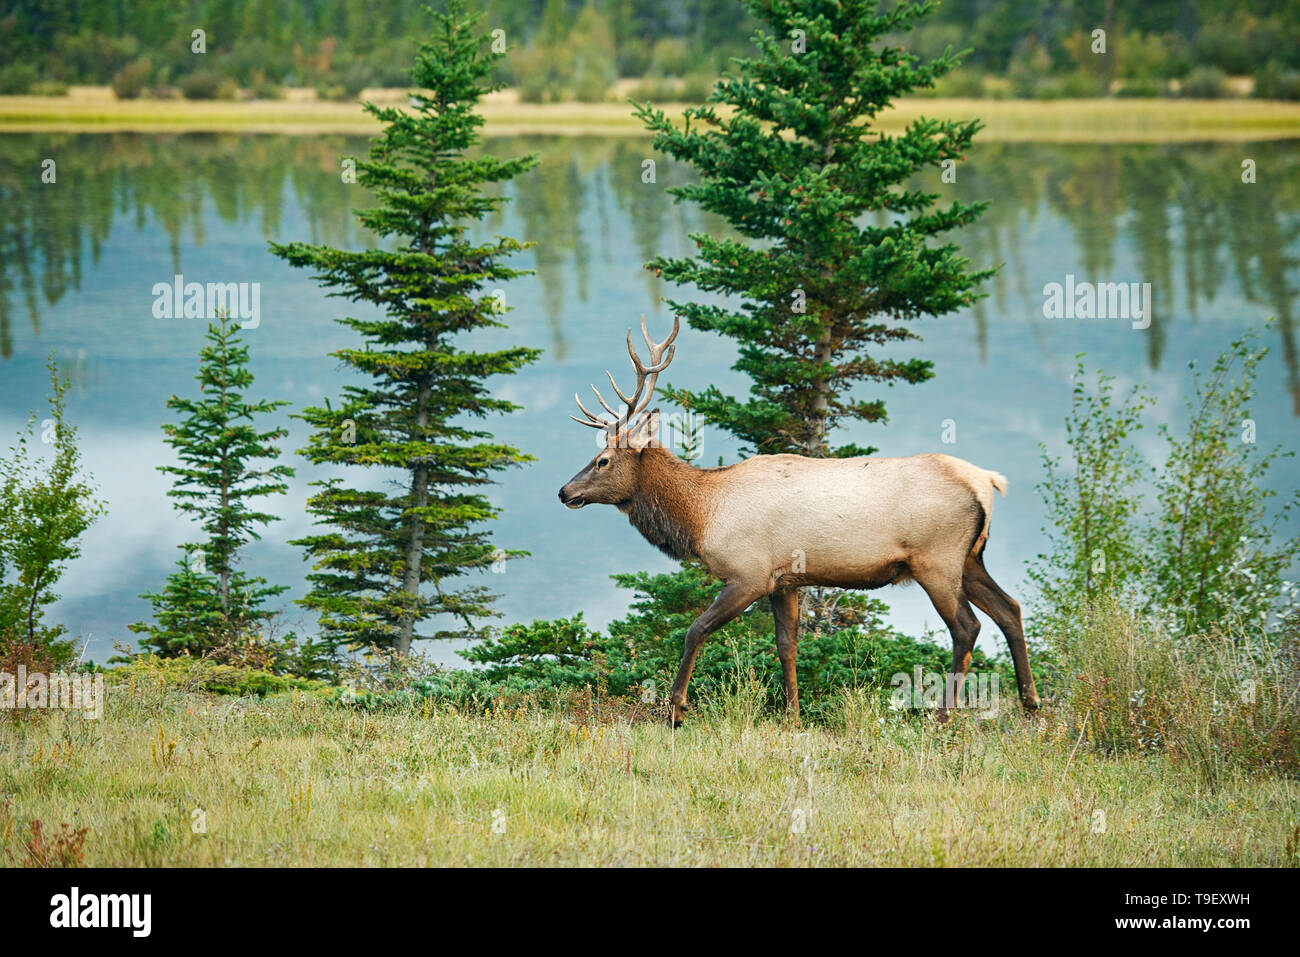 Bull Elk oder wapiti, Cervus canadensis von der Athabasca River Jasper National Park, Alberta, Kanada Stockfoto